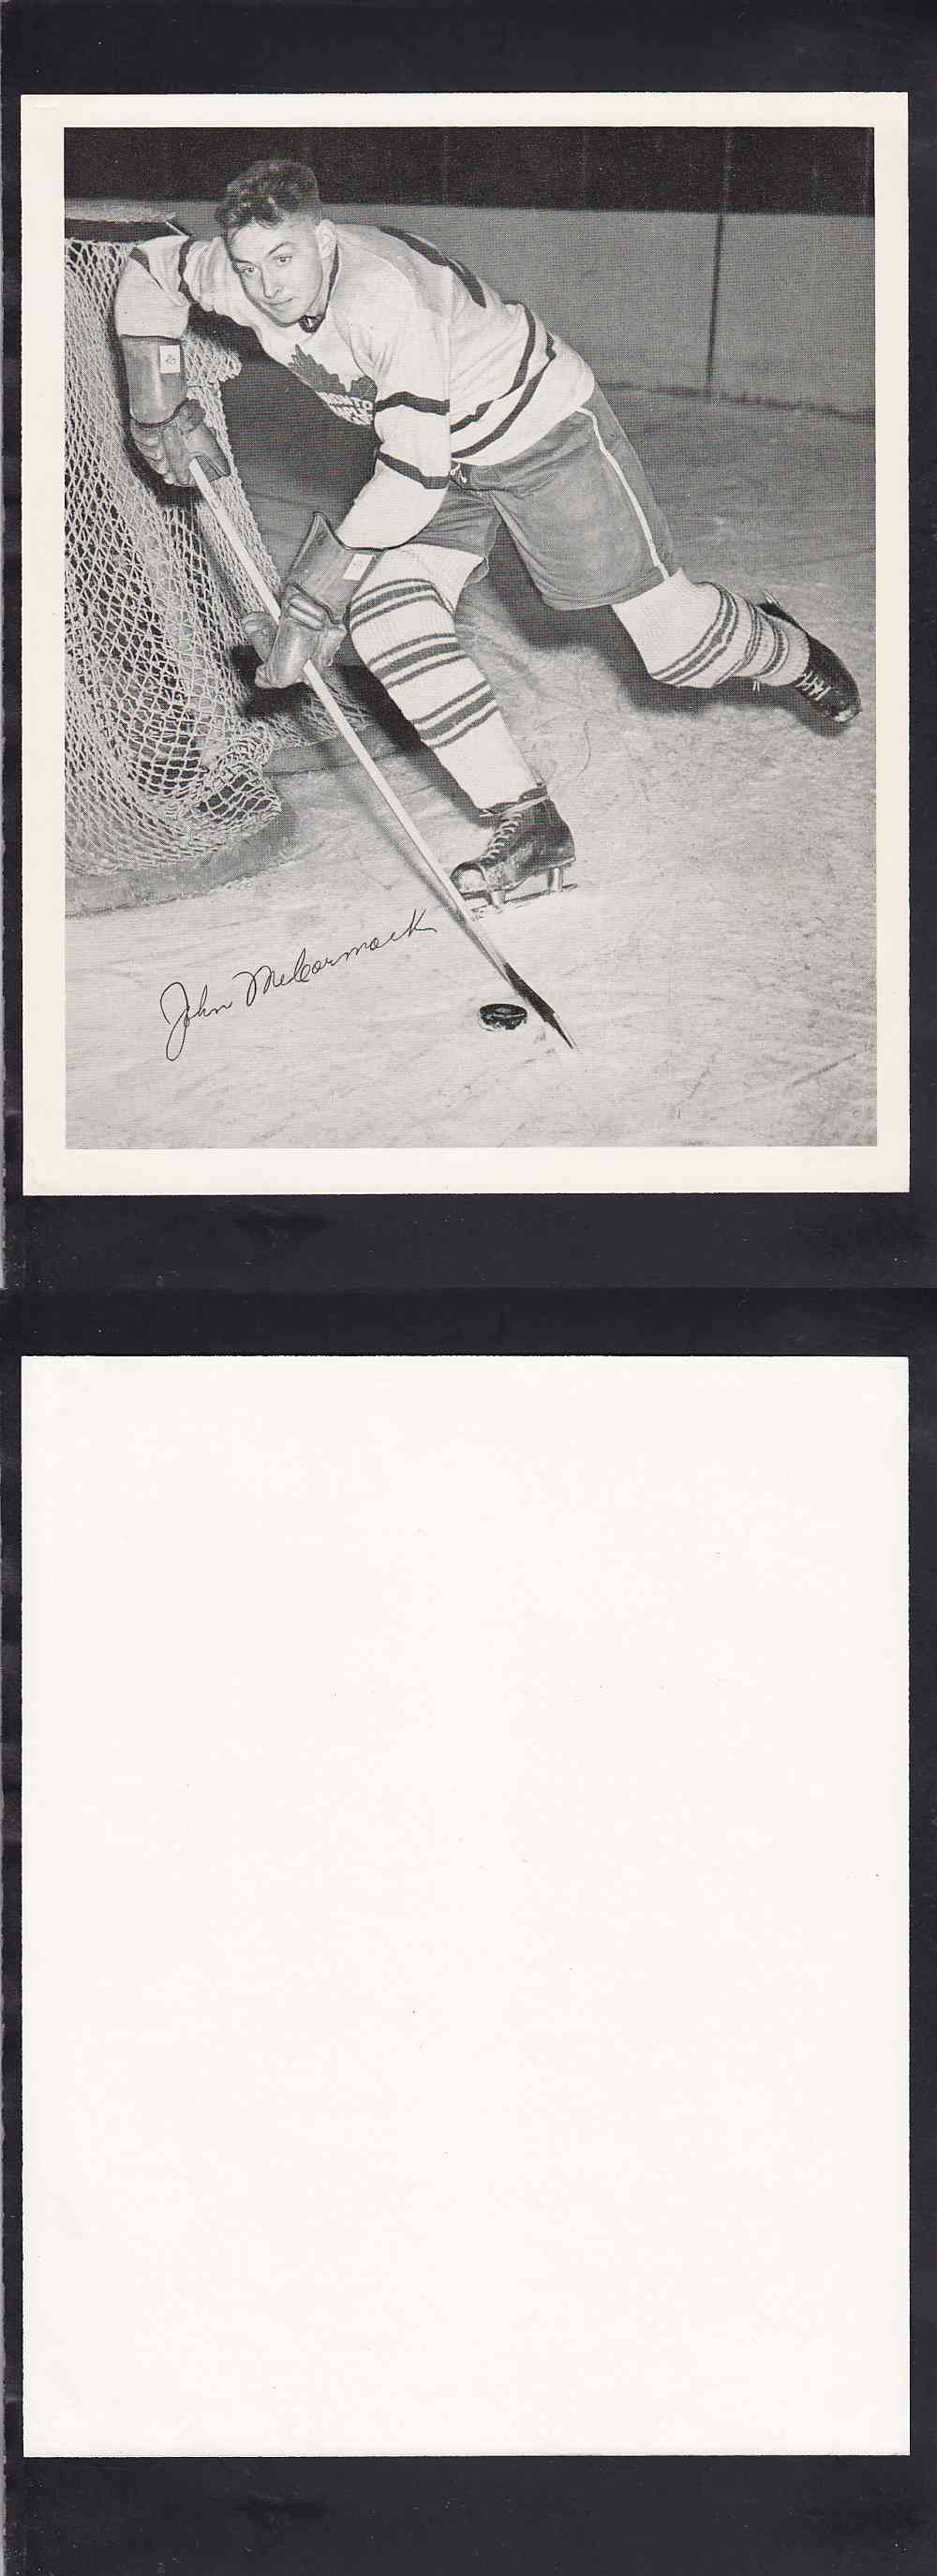 1945-54 QUAKER OATS PHOTO J. McCORMACK photo